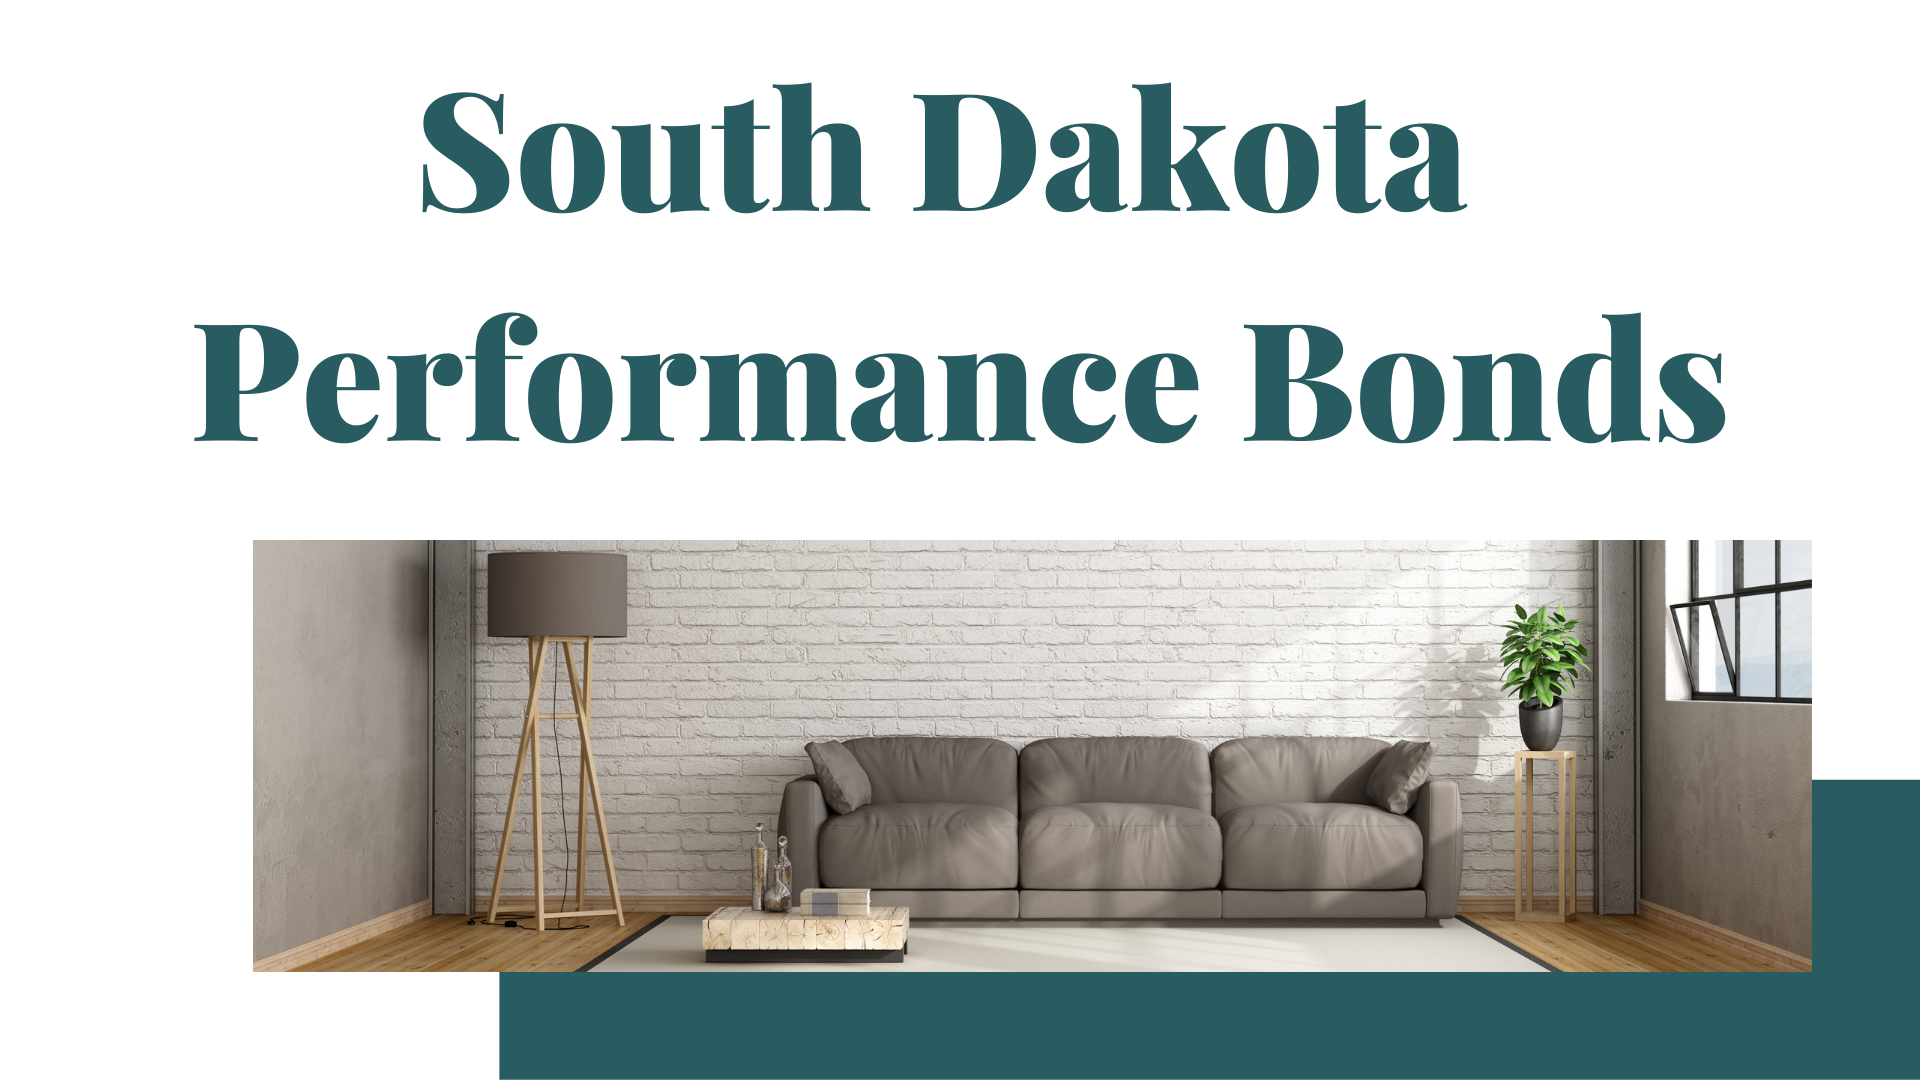 performance bond - What is a Surety Performance Bond in South Dakota